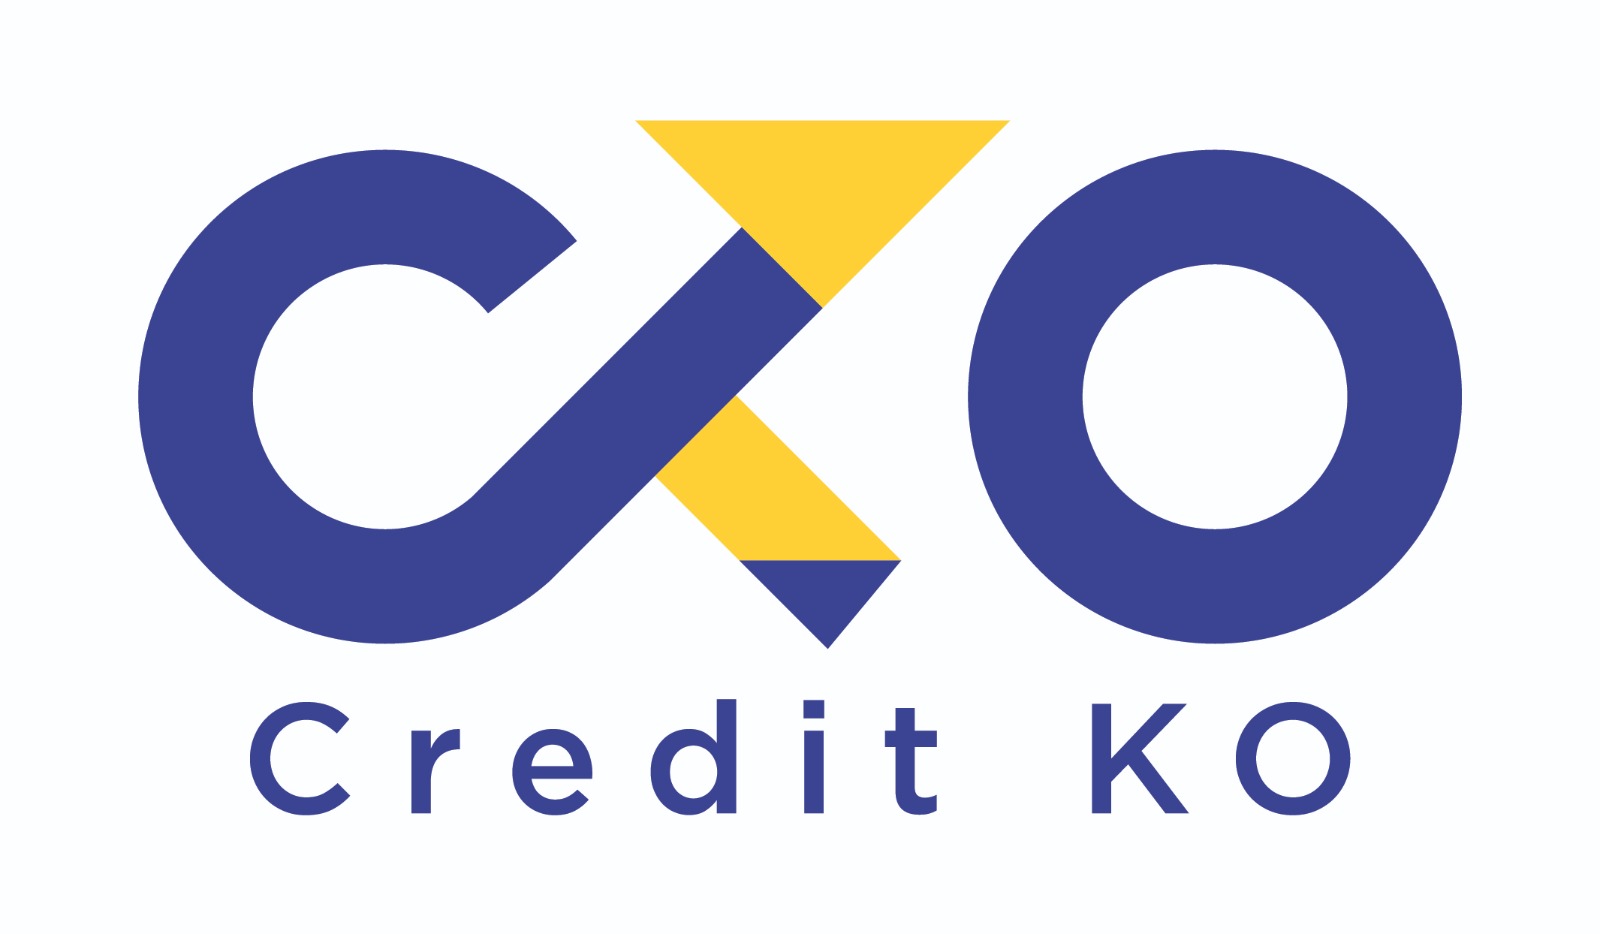 Credit KO Company